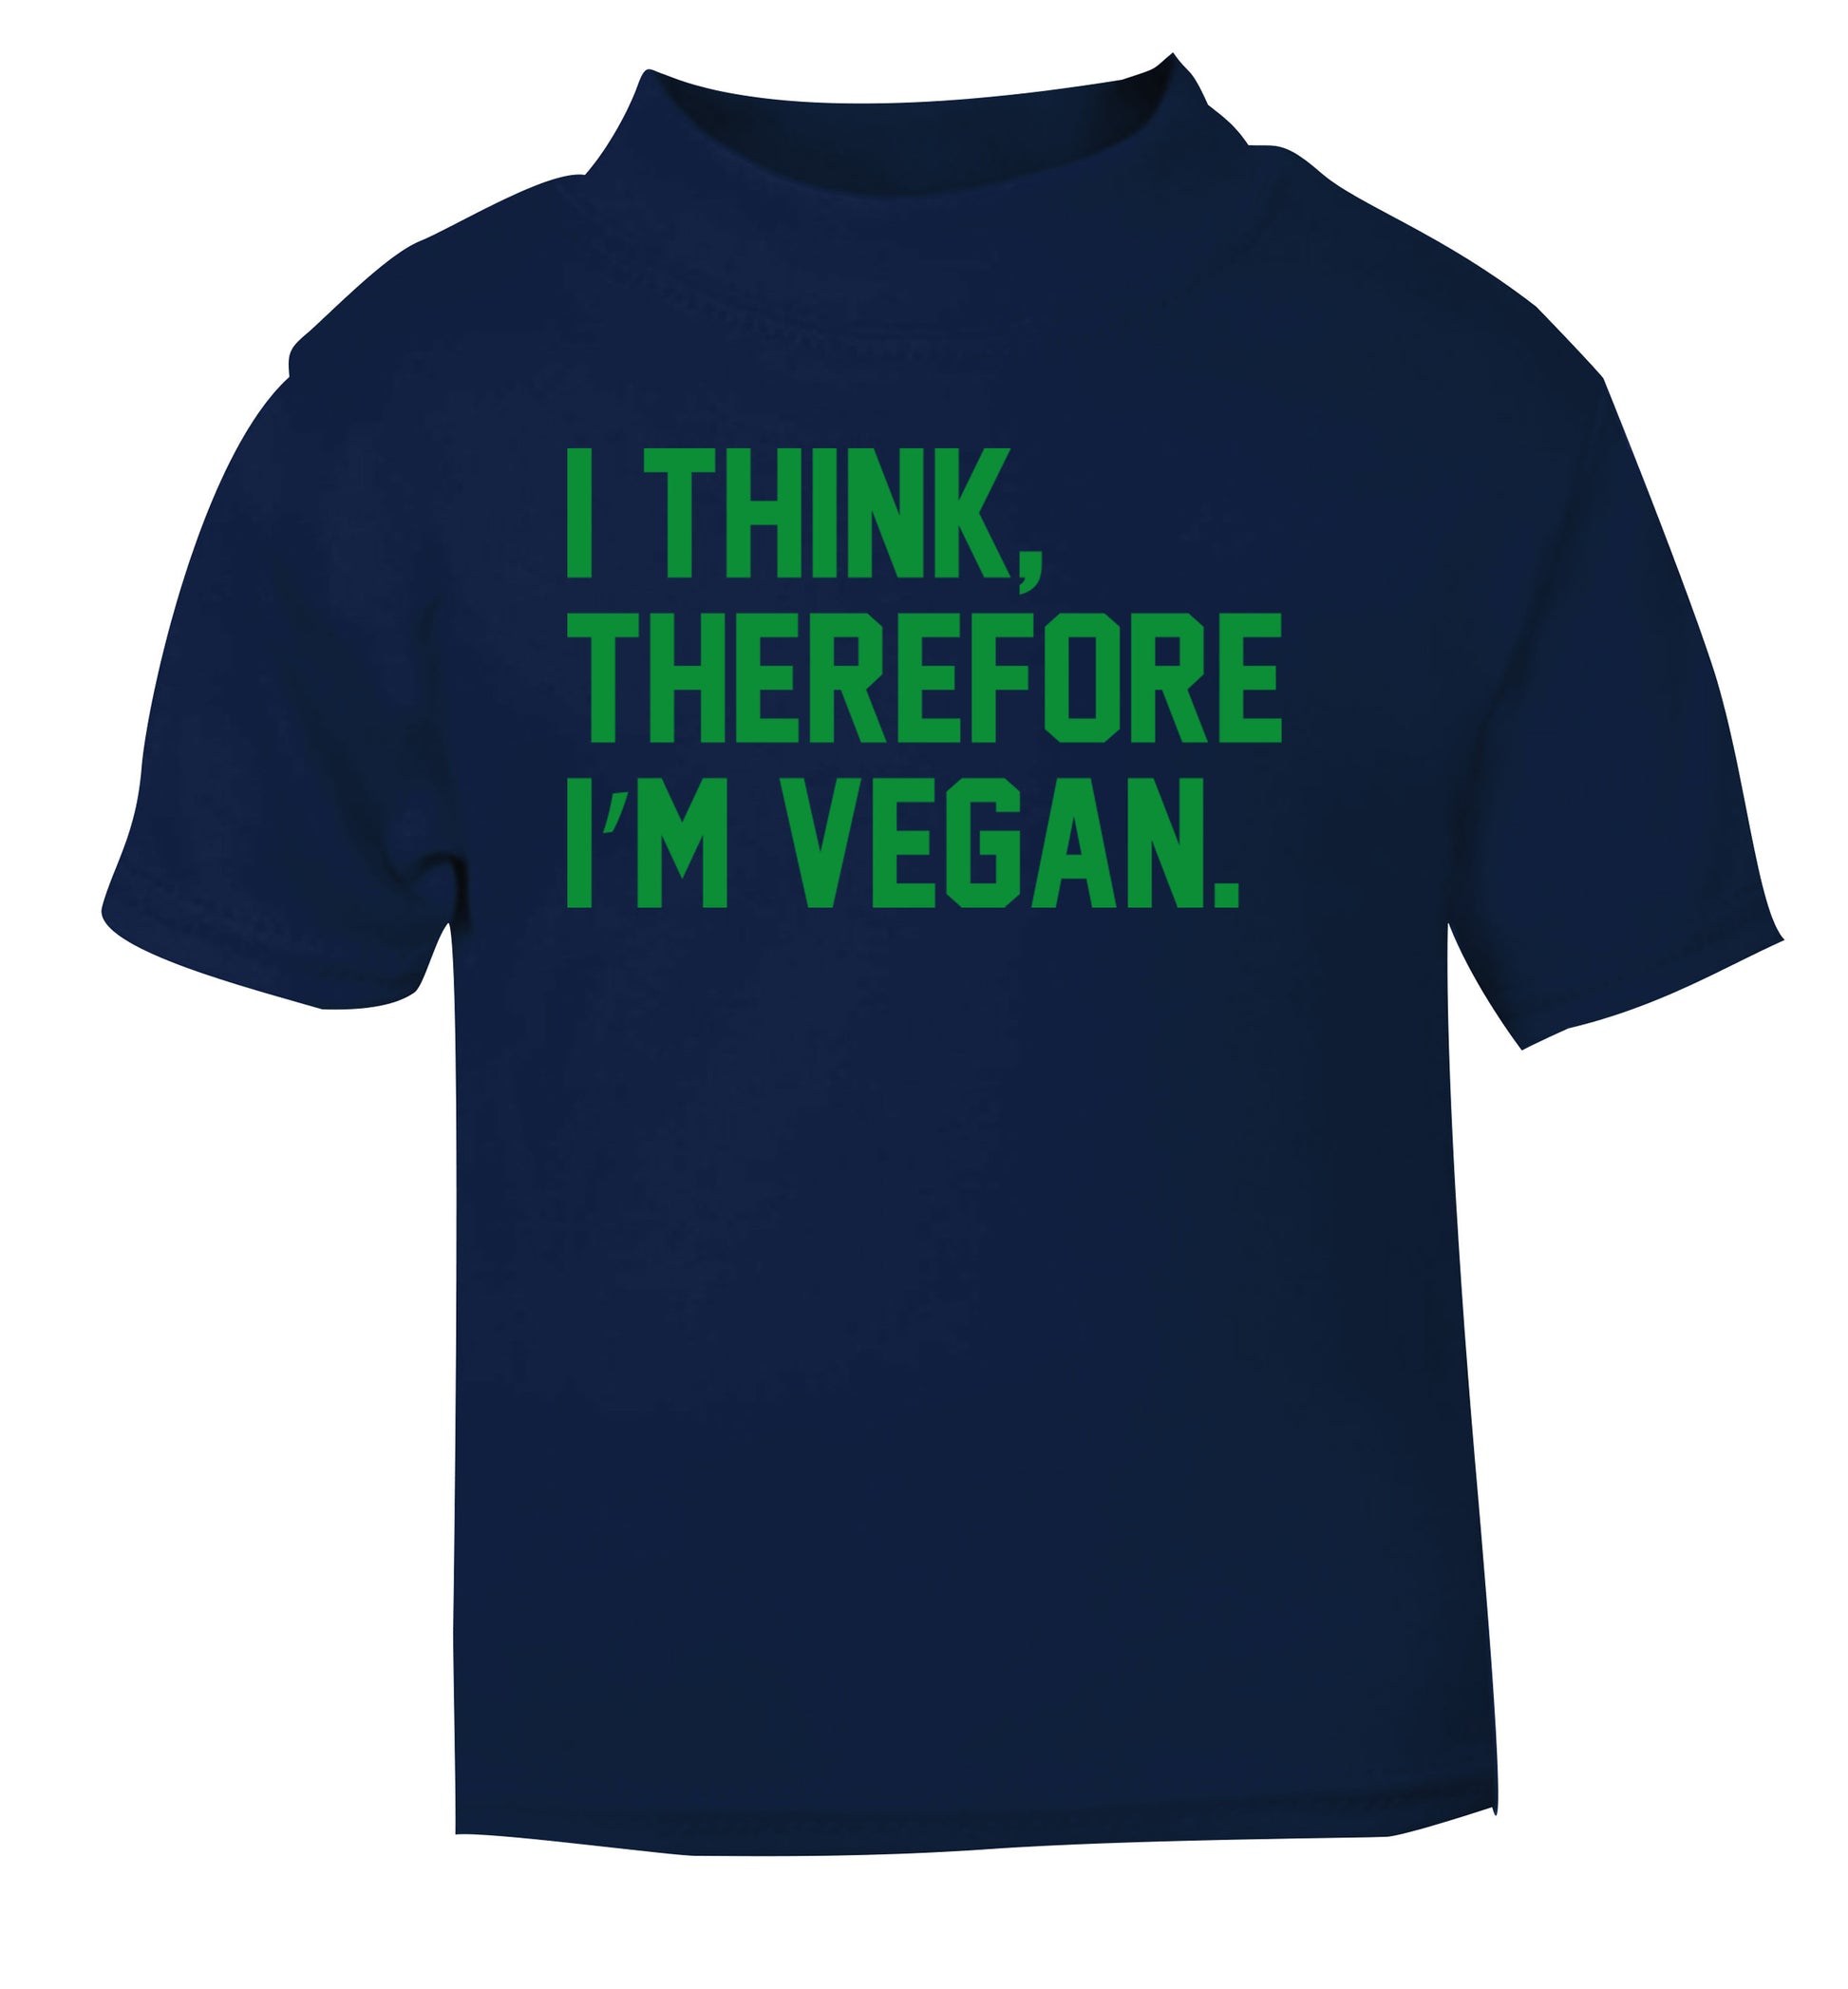 I think therefore I'm vegan navy Baby Toddler Tshirt 2 Years